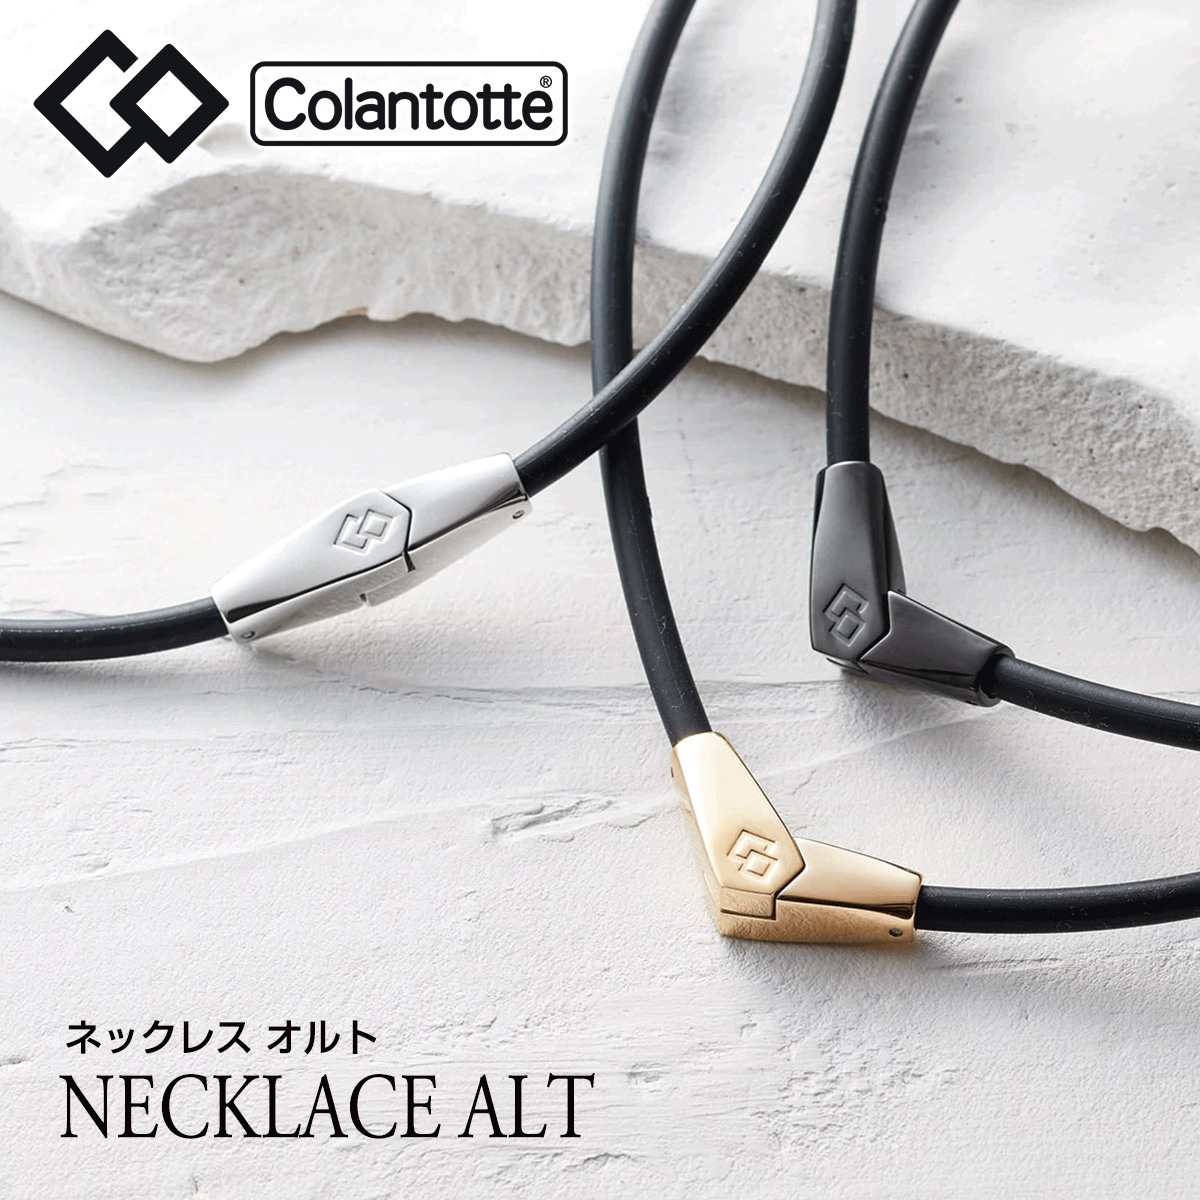 ColanTotte日本正規品 コラントッテ ネックレス ALT(オルト)  男女兼用 磁気ネックレス 「 ABARA 」